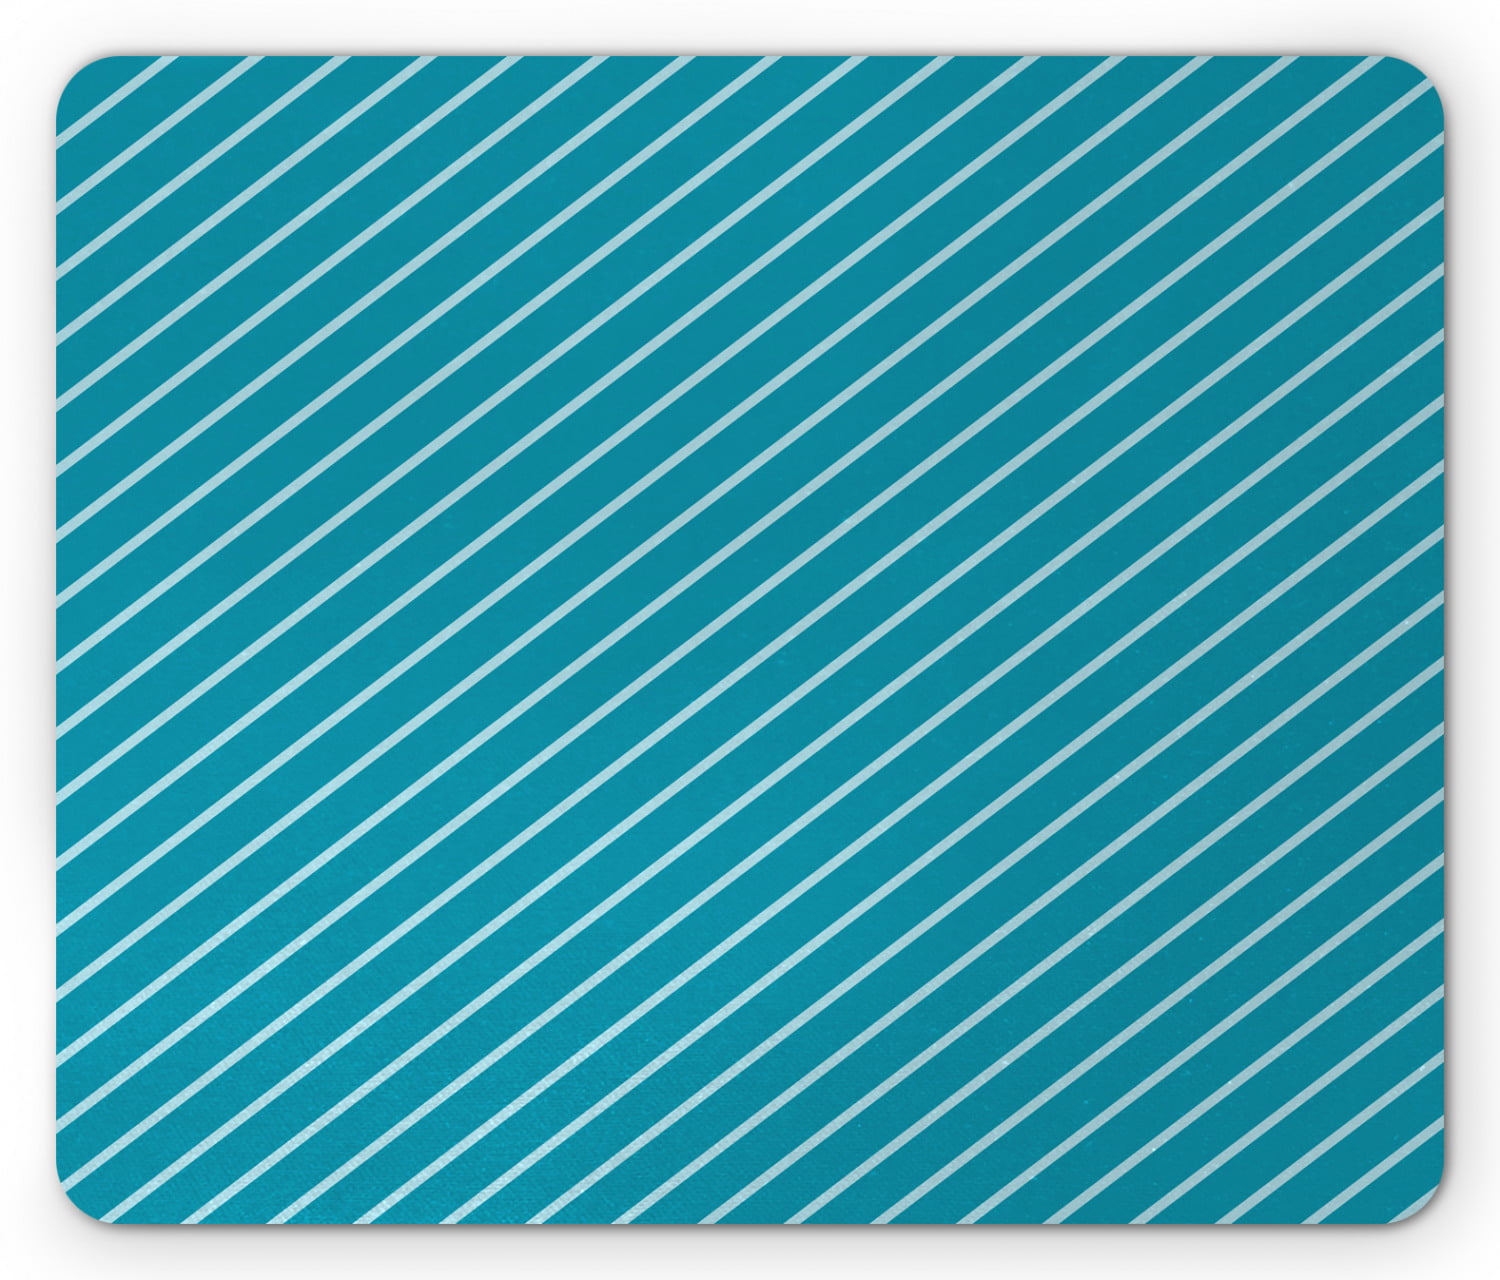 Geometric Mouse Pad Diagonal Striped Pattern Mediterranean Cruise